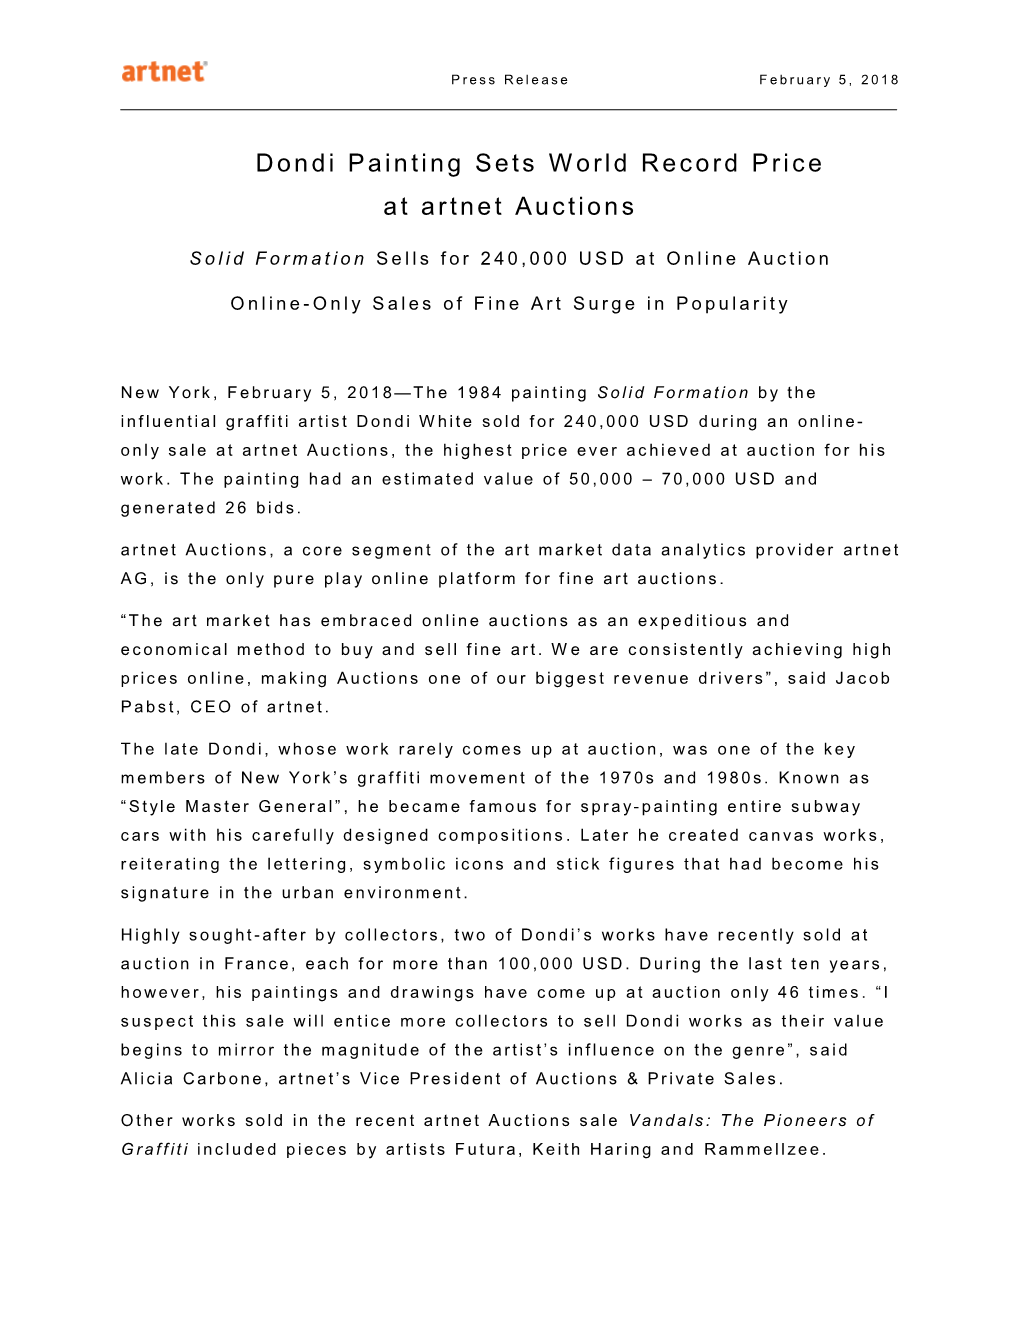 Dondi Painting Sets World Record Price at Artnet Auctions